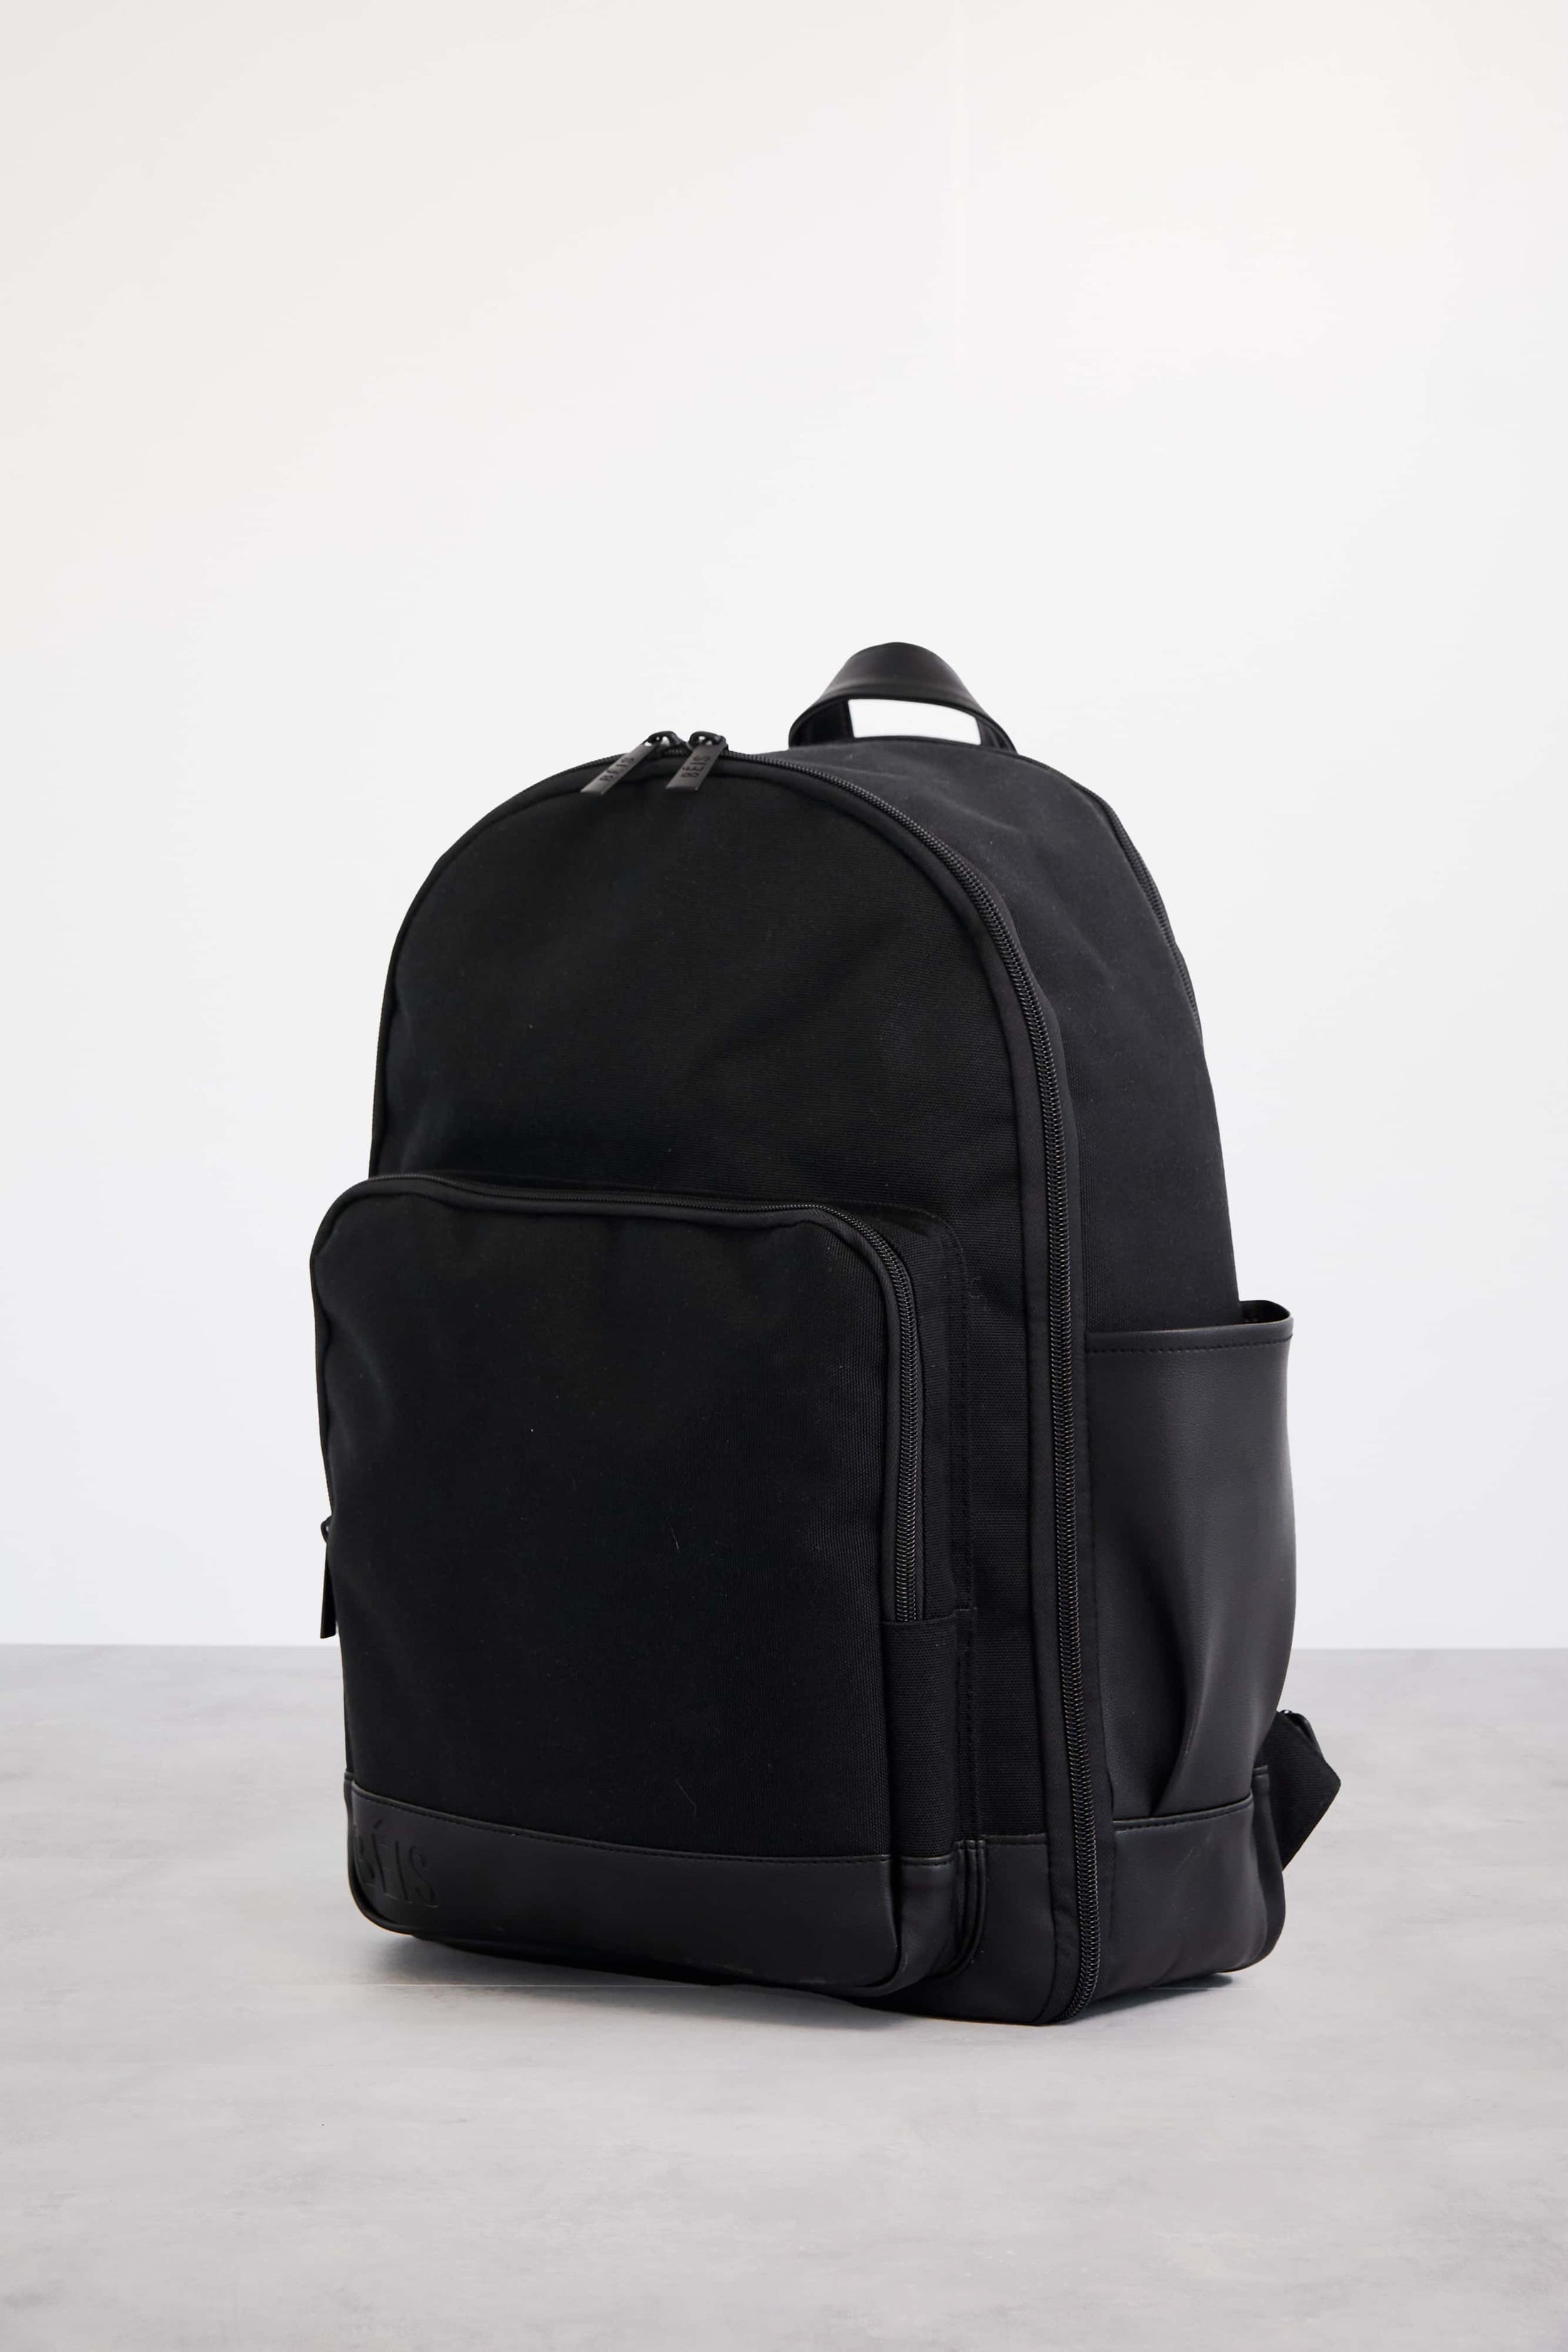 BÉIS 'The Backpack' in Black - Black Laptop Knapsack For Work & Travel ...